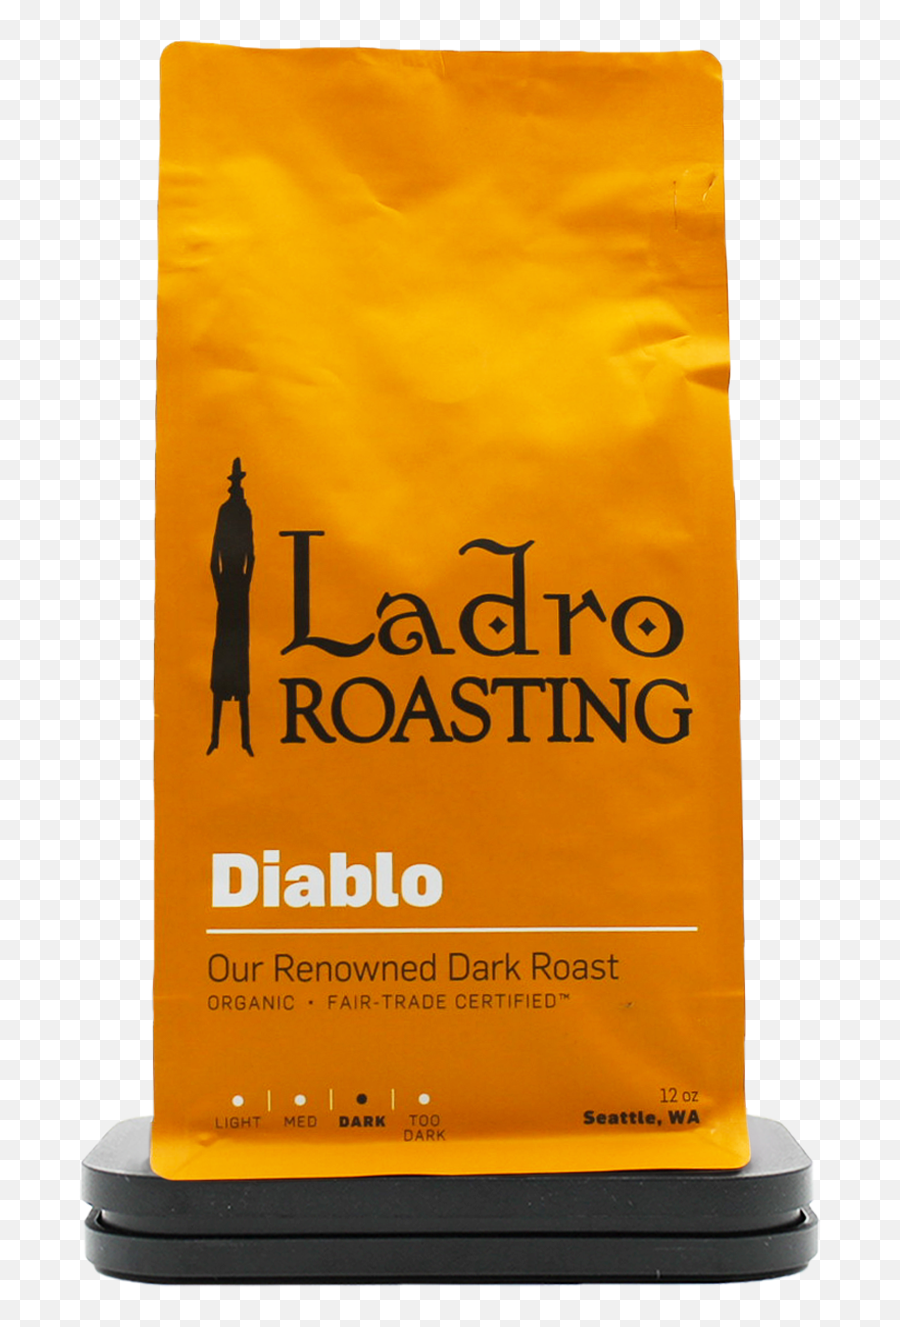 Bottomless Diablo - Ladro Roasting Caffe Ladro Png,Brittany Nicole Nashville Icon